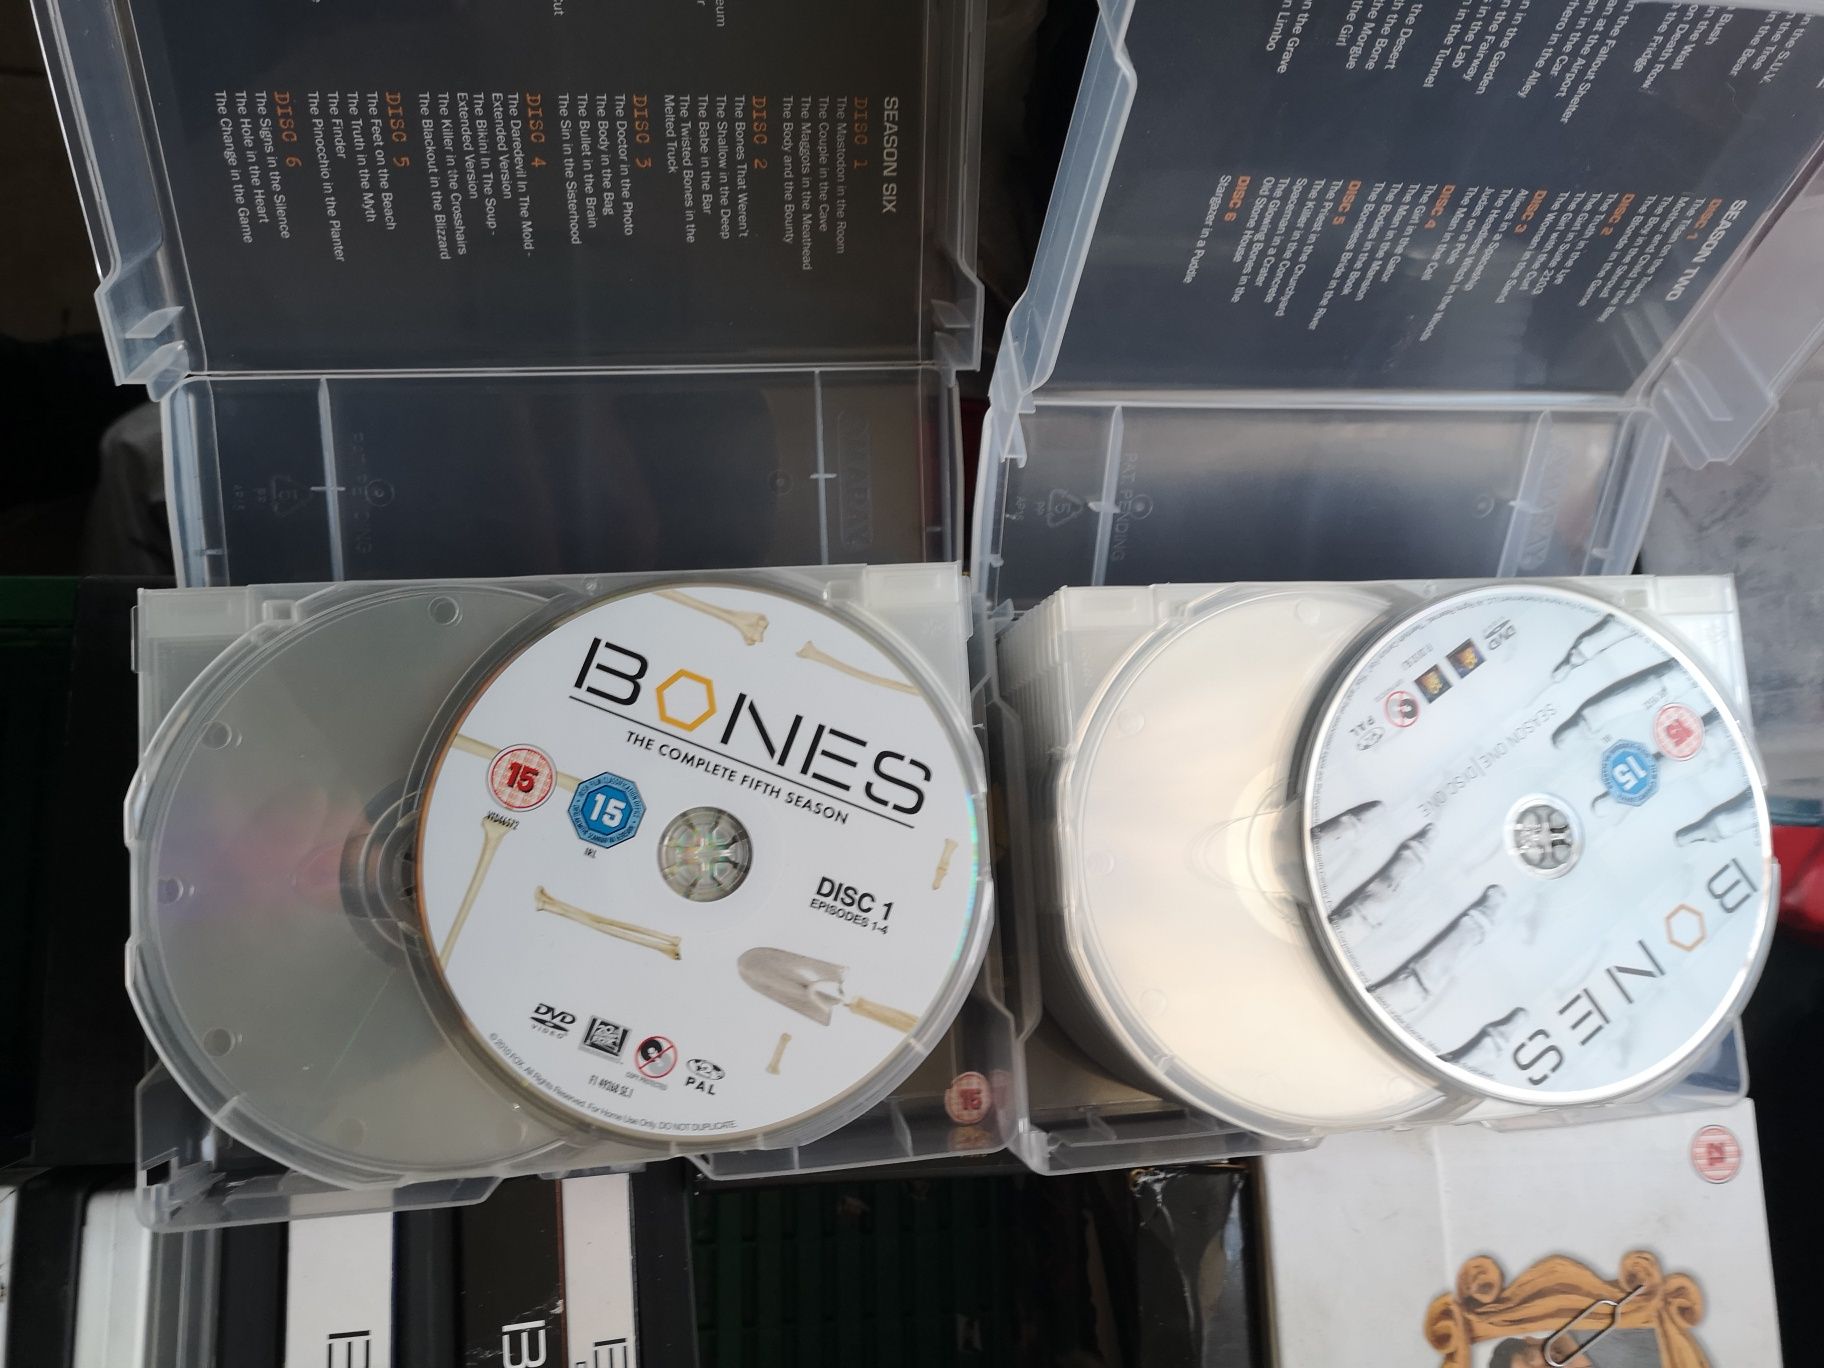 Colecție dvd serialul boines